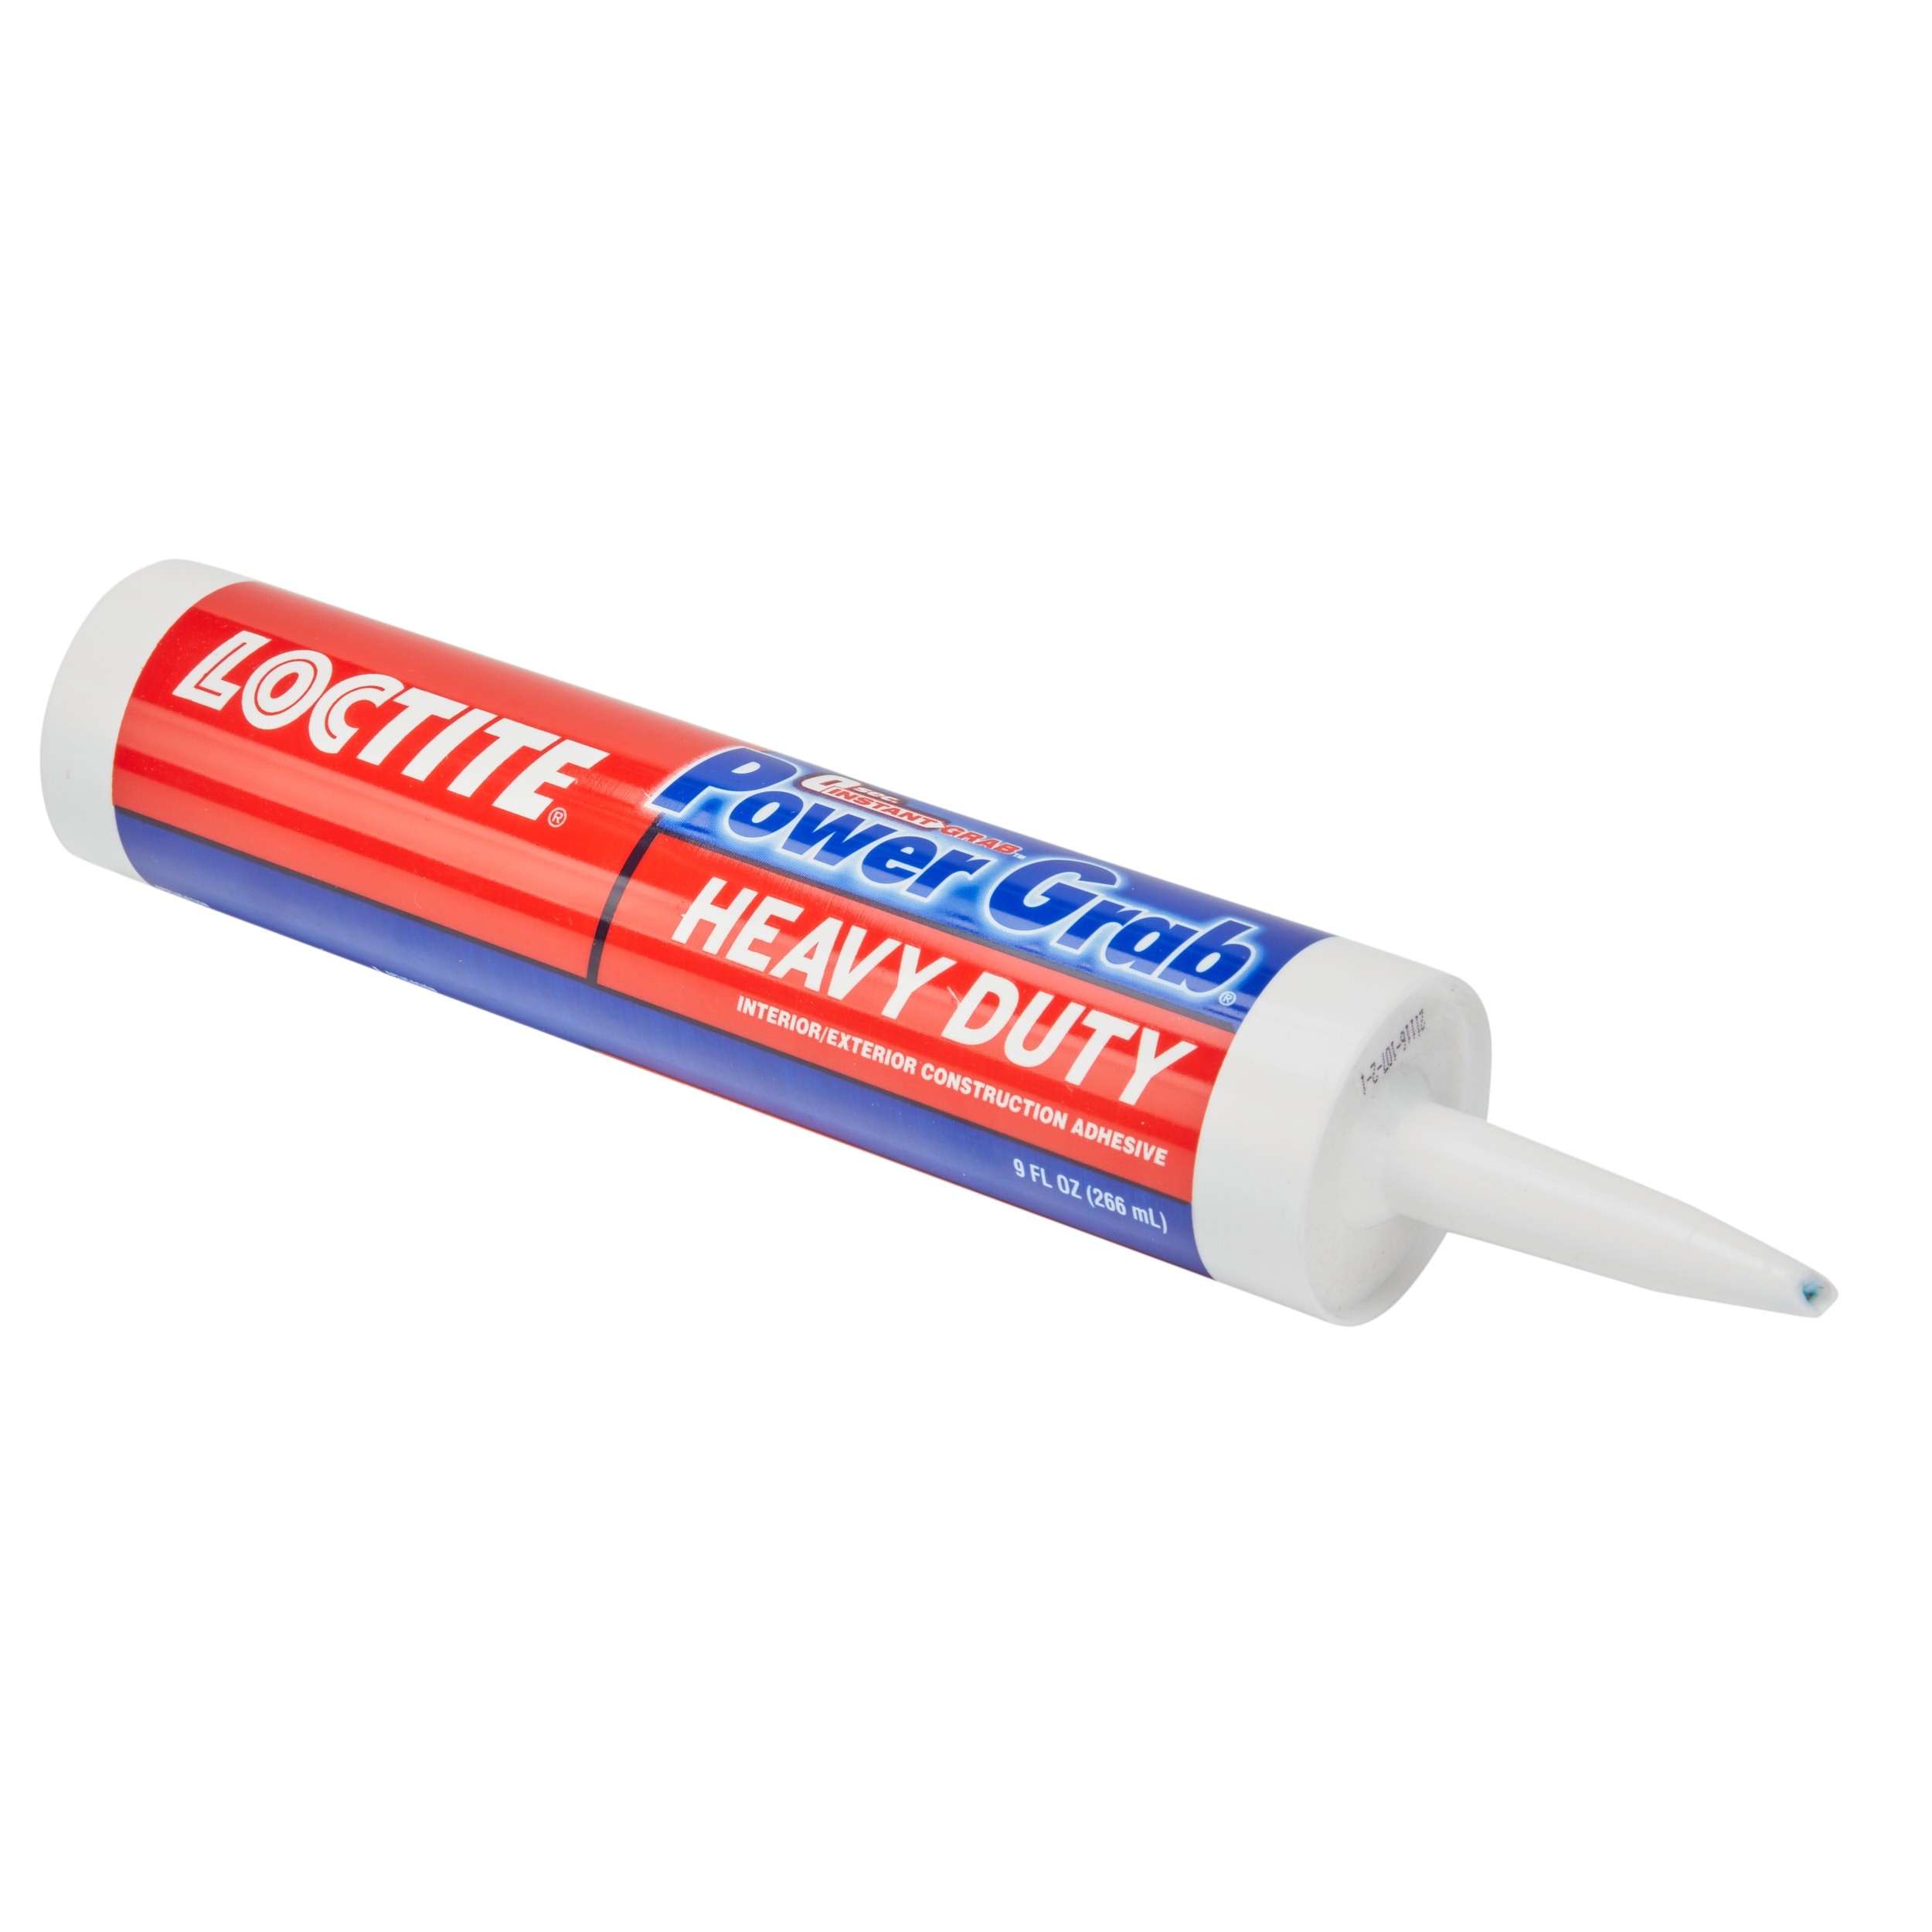 Loctite® Construction Adhesive - 10 oz S-24796 - Uline